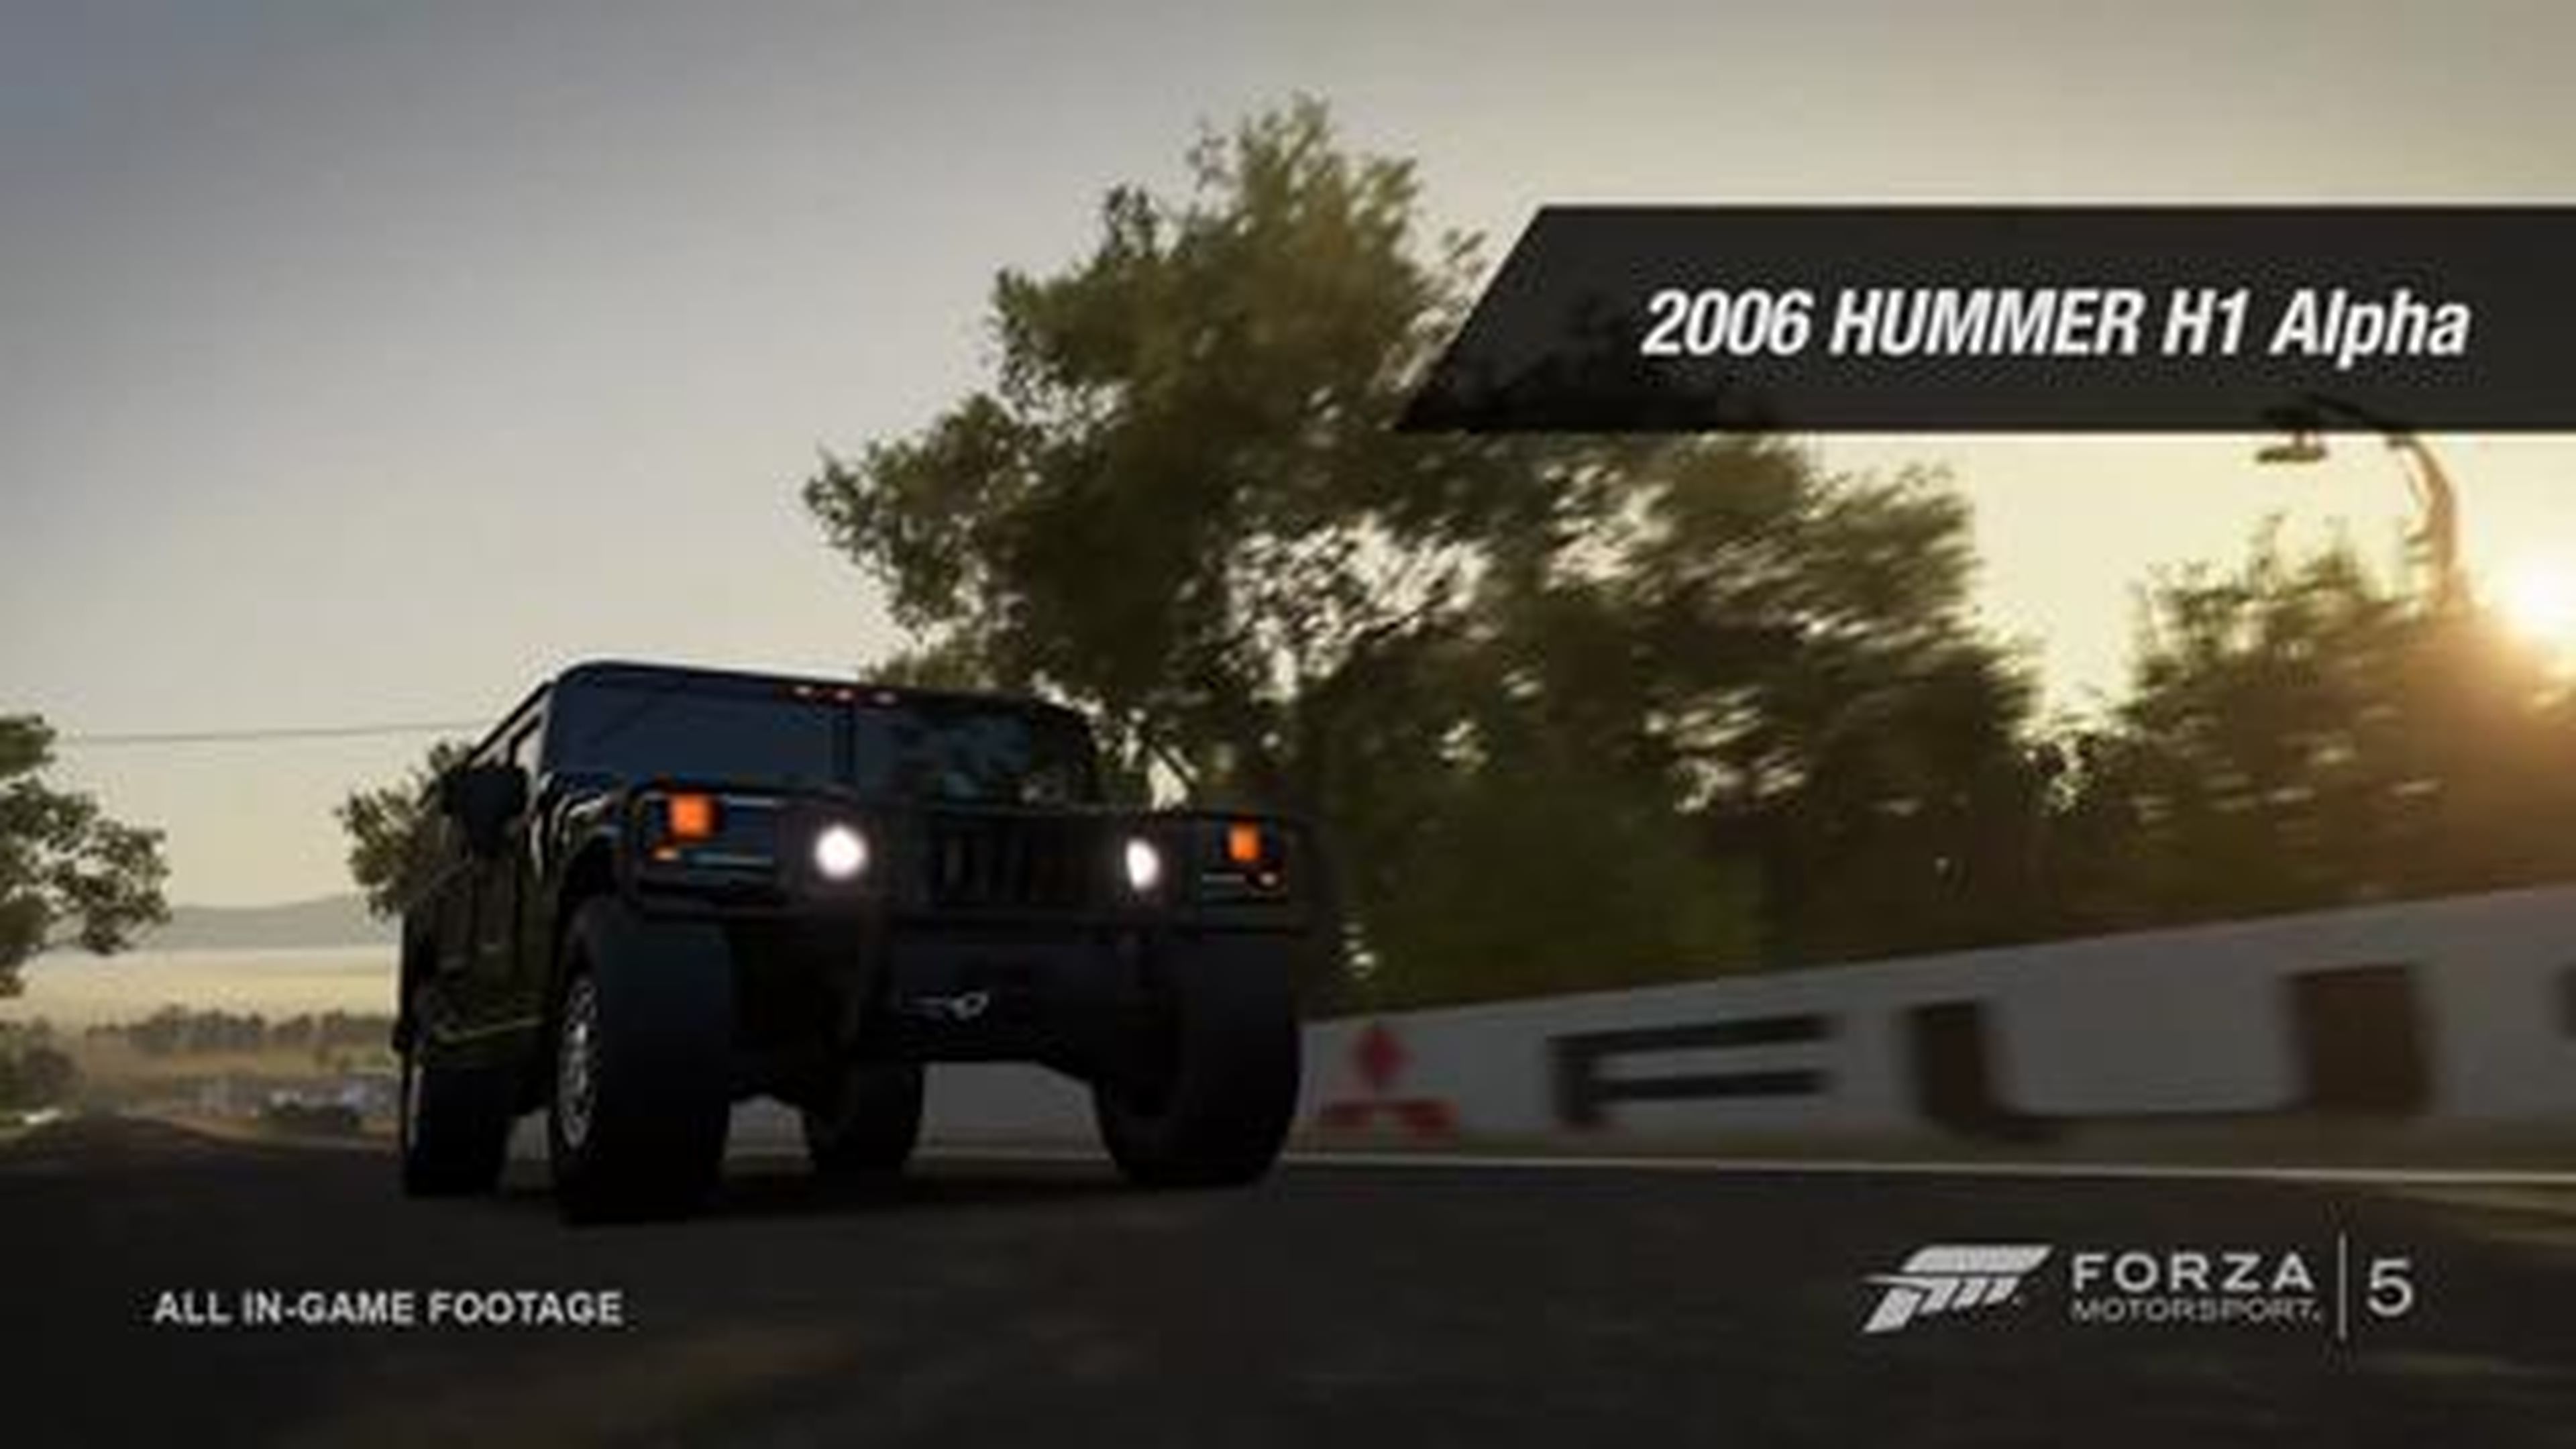 Forza Motorsport 5 [PEGI 3] - Top Gear Car Pack